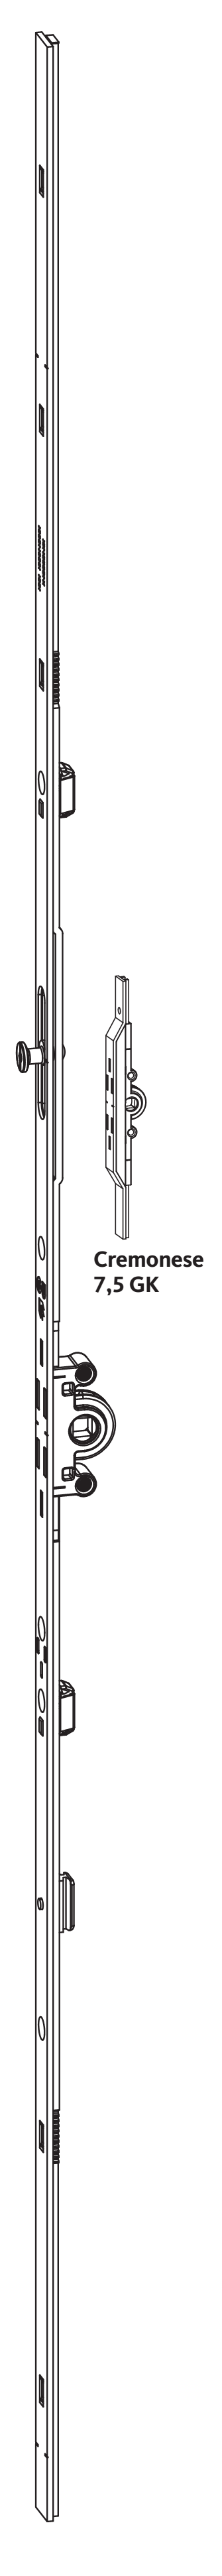 GU-ITALIA -  Cremonese UNI-JET anta a bandiera altezza maniglia variabile prolungabile senza dss - gr / dim. 880 - entrata 7,5 - alt. man. 375 - 600 - lbb/hbb 751 - 1200